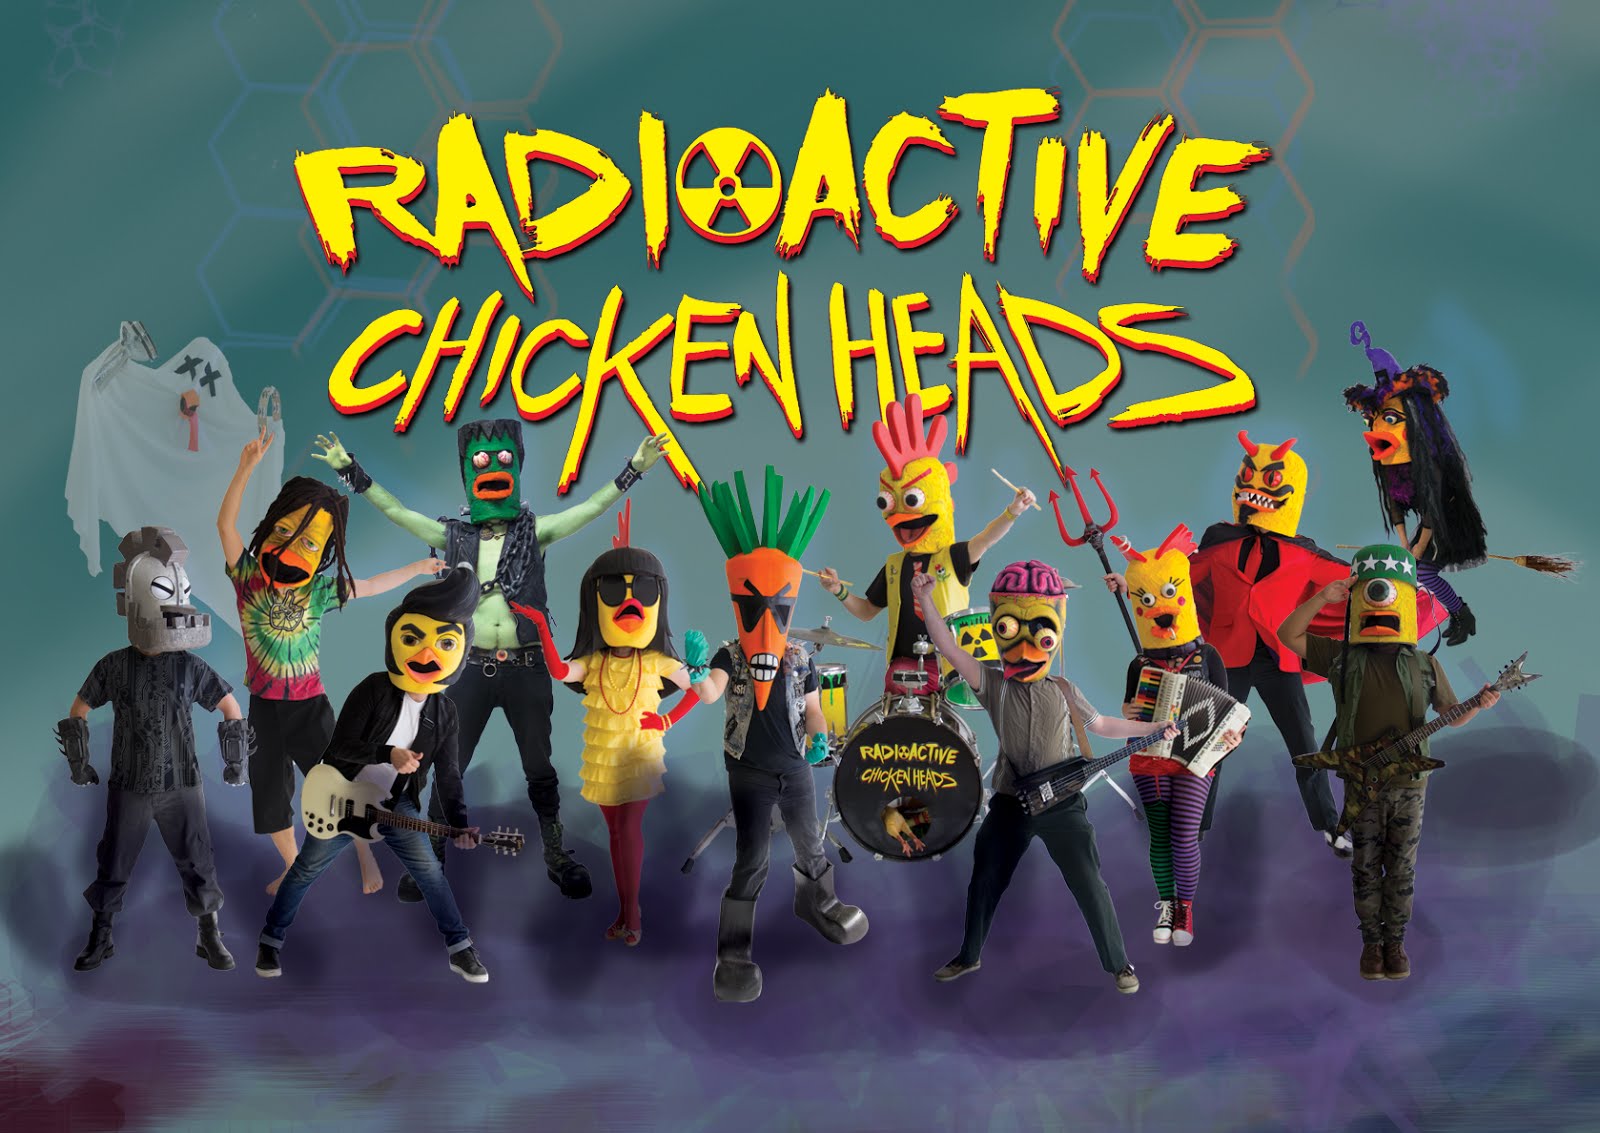 Radioactive Chicken Heads